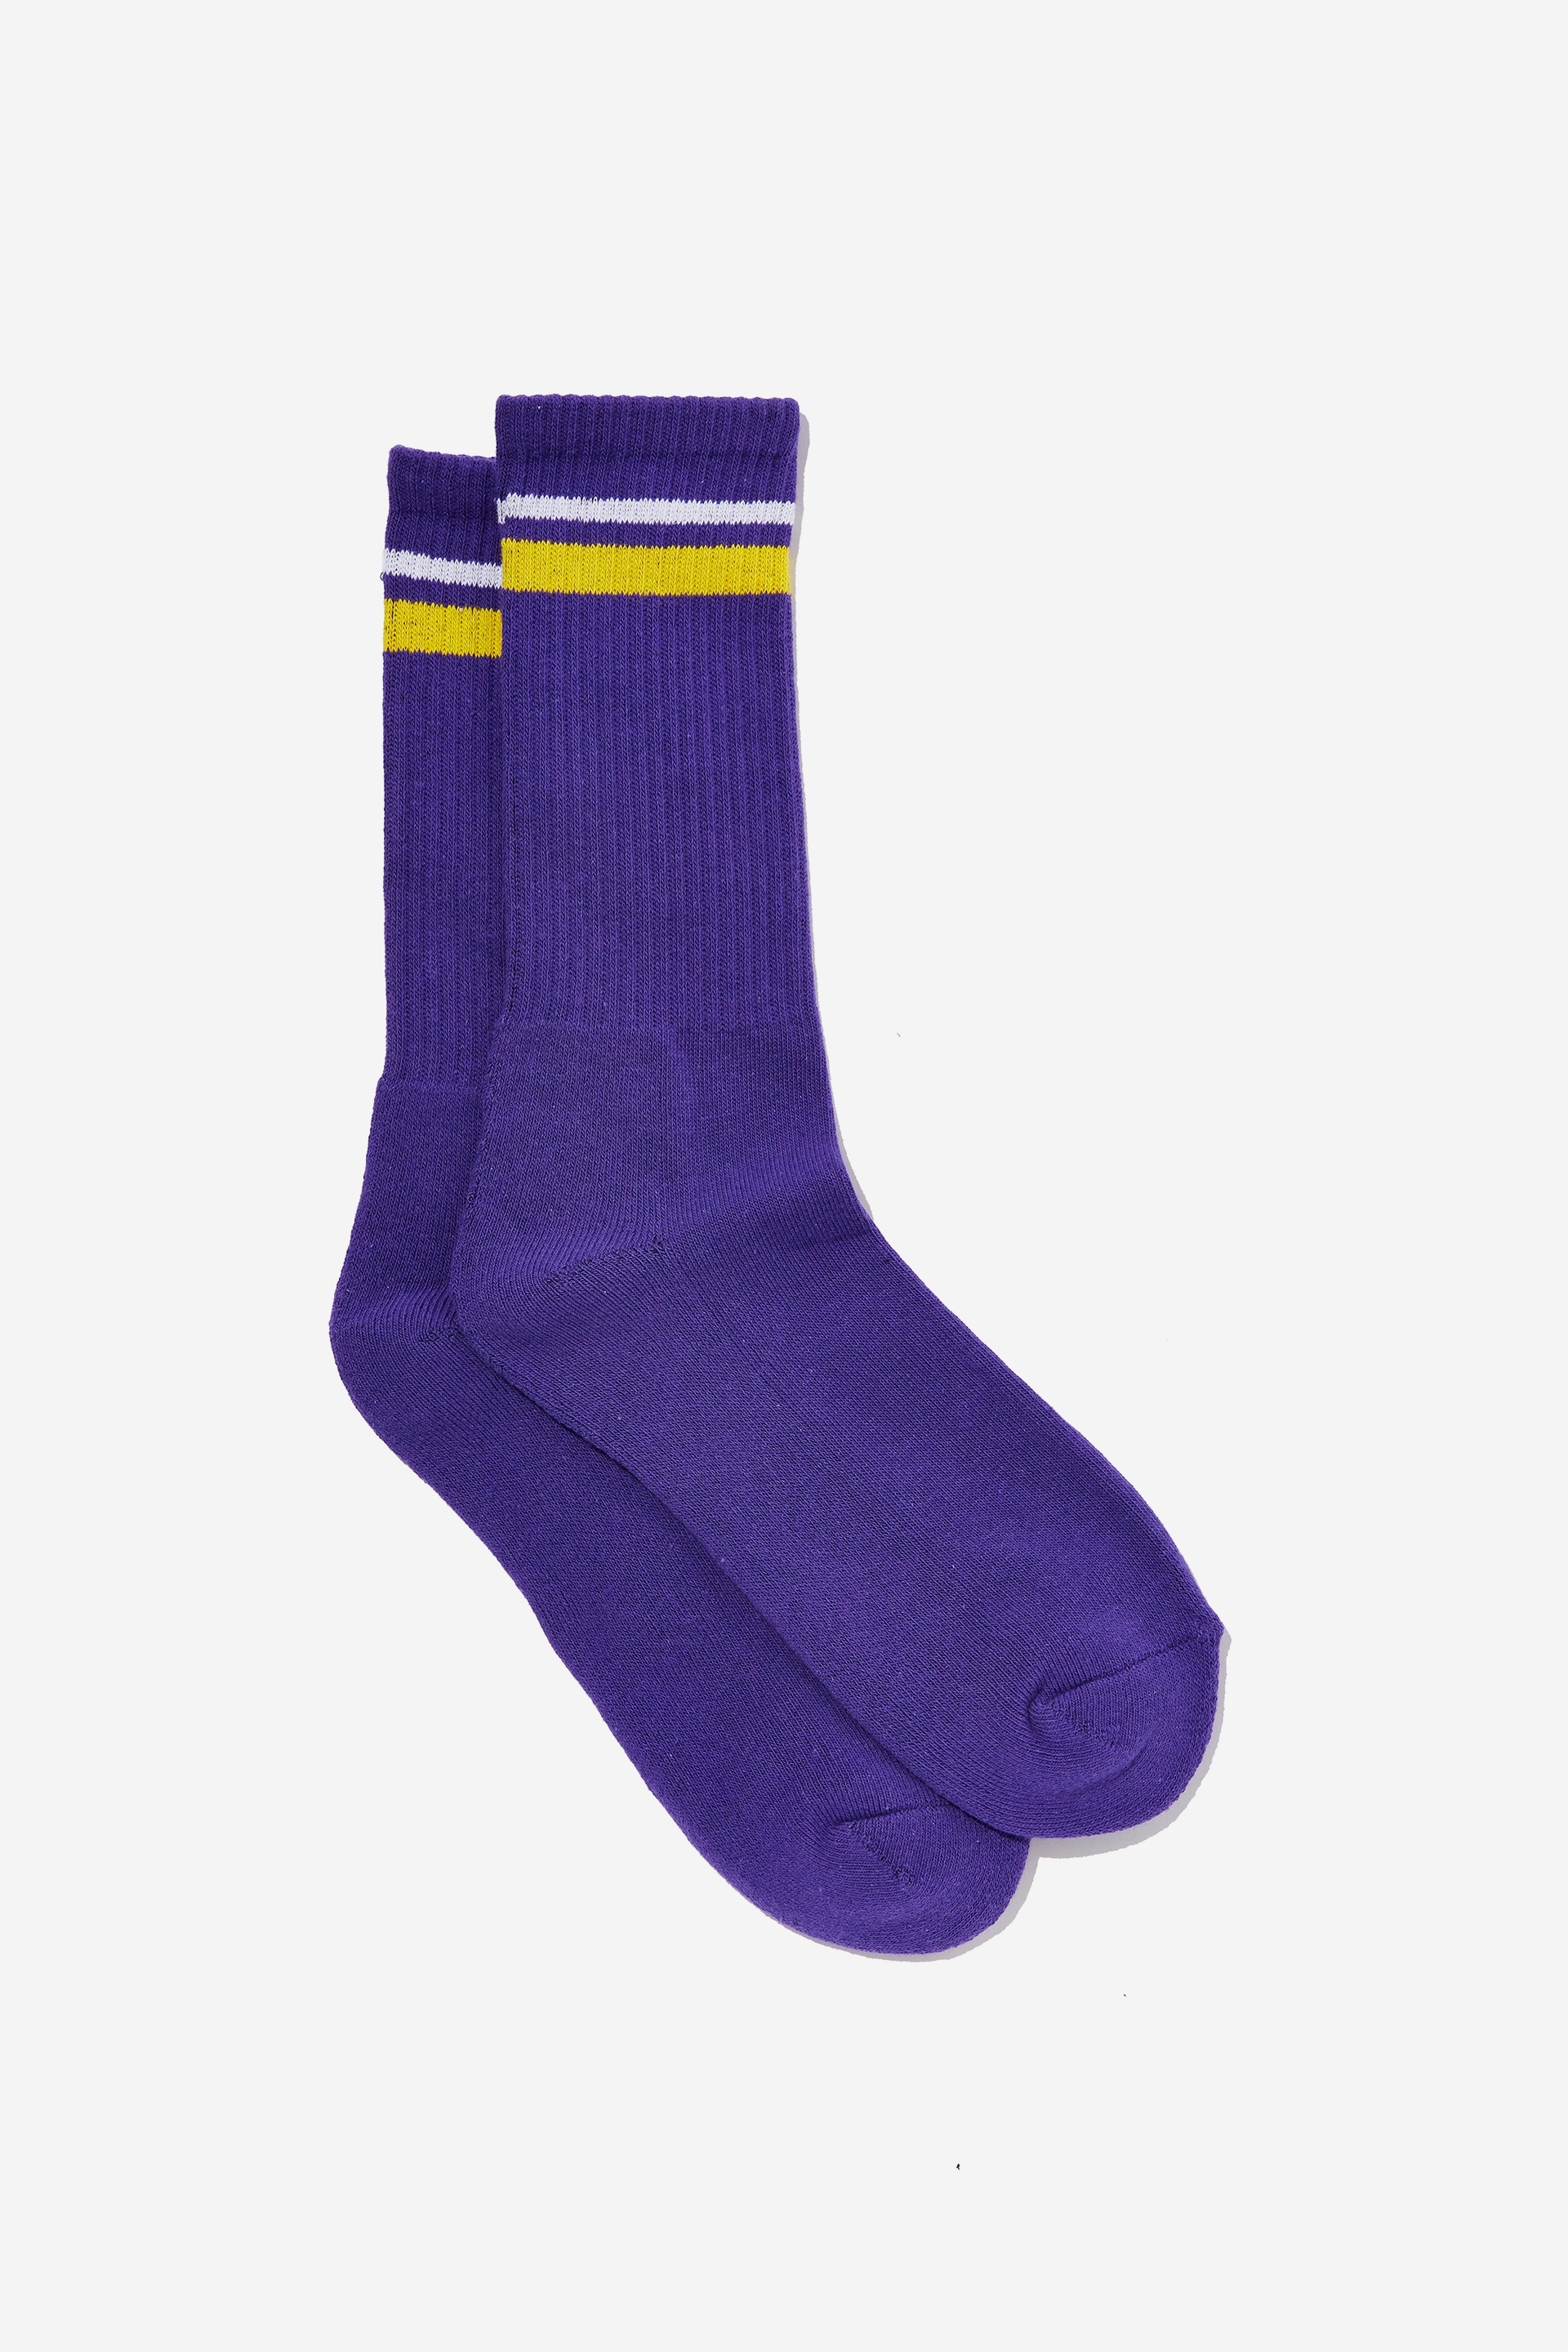 Factorie - Retro Ribbed Socks - Purple yellow stripe